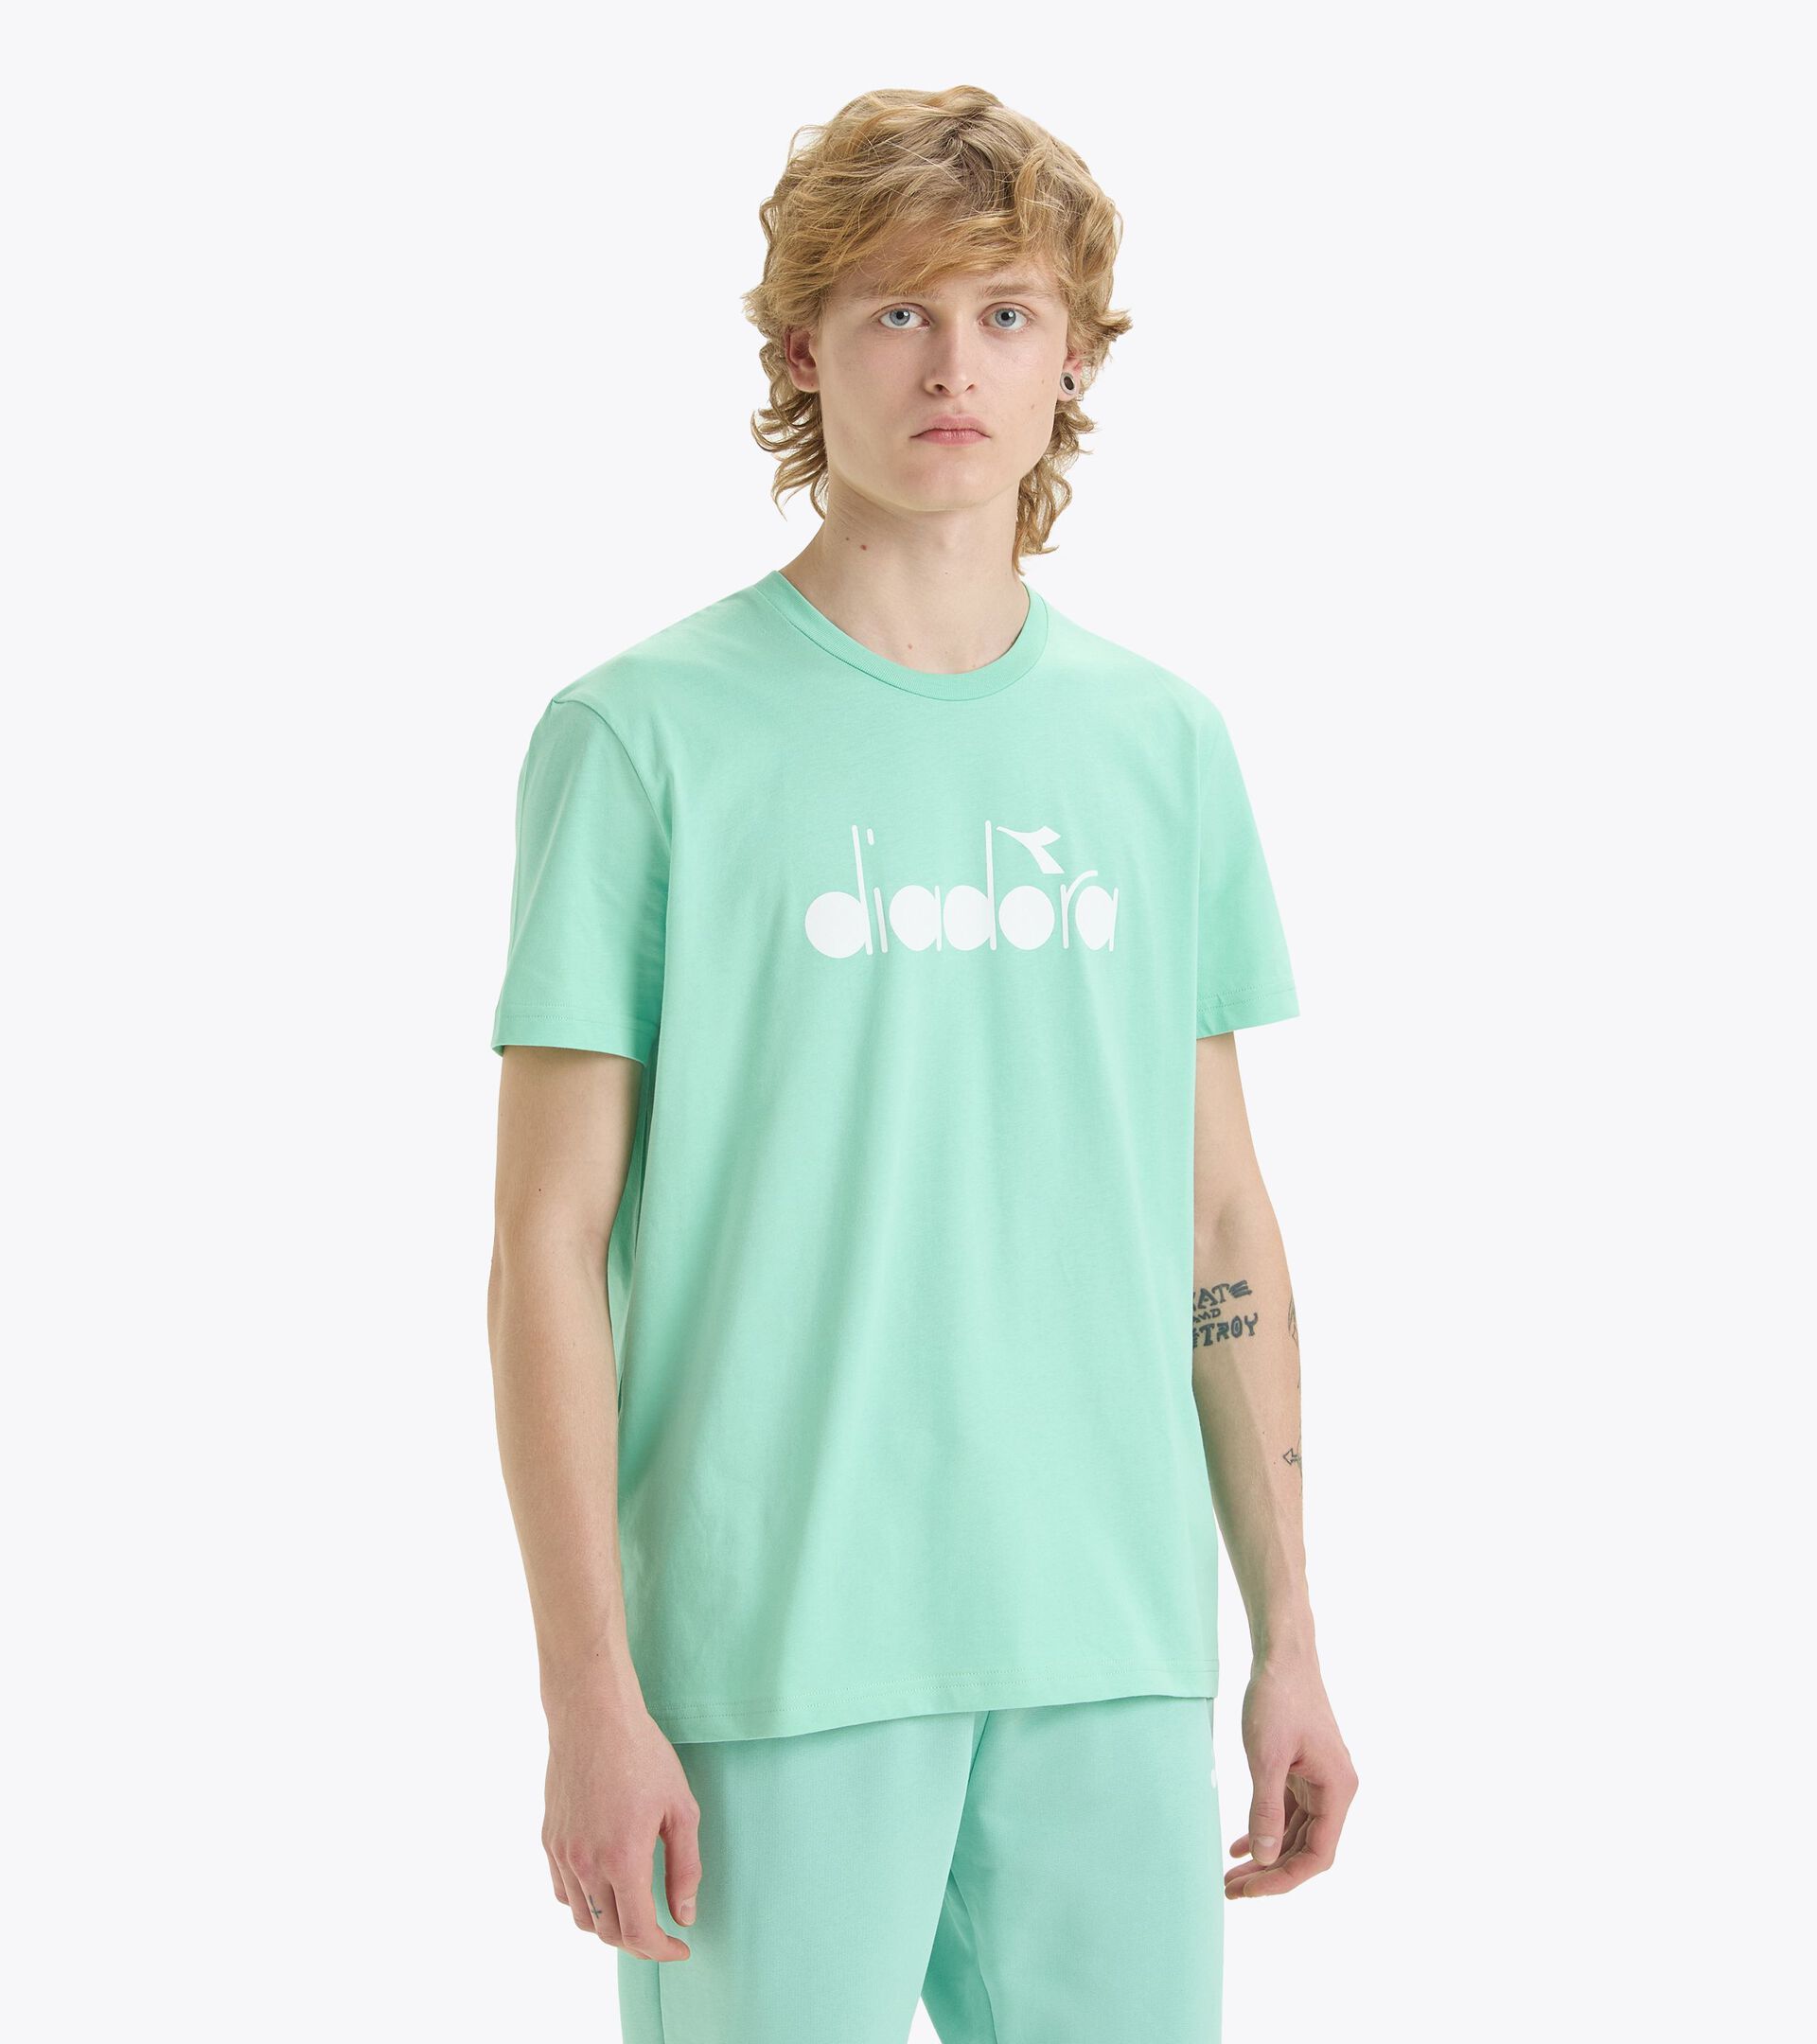 T-shirt - Made in Italy - Gender Neutral T-SHIRT SS LOGO NEON GREEN - Diadora